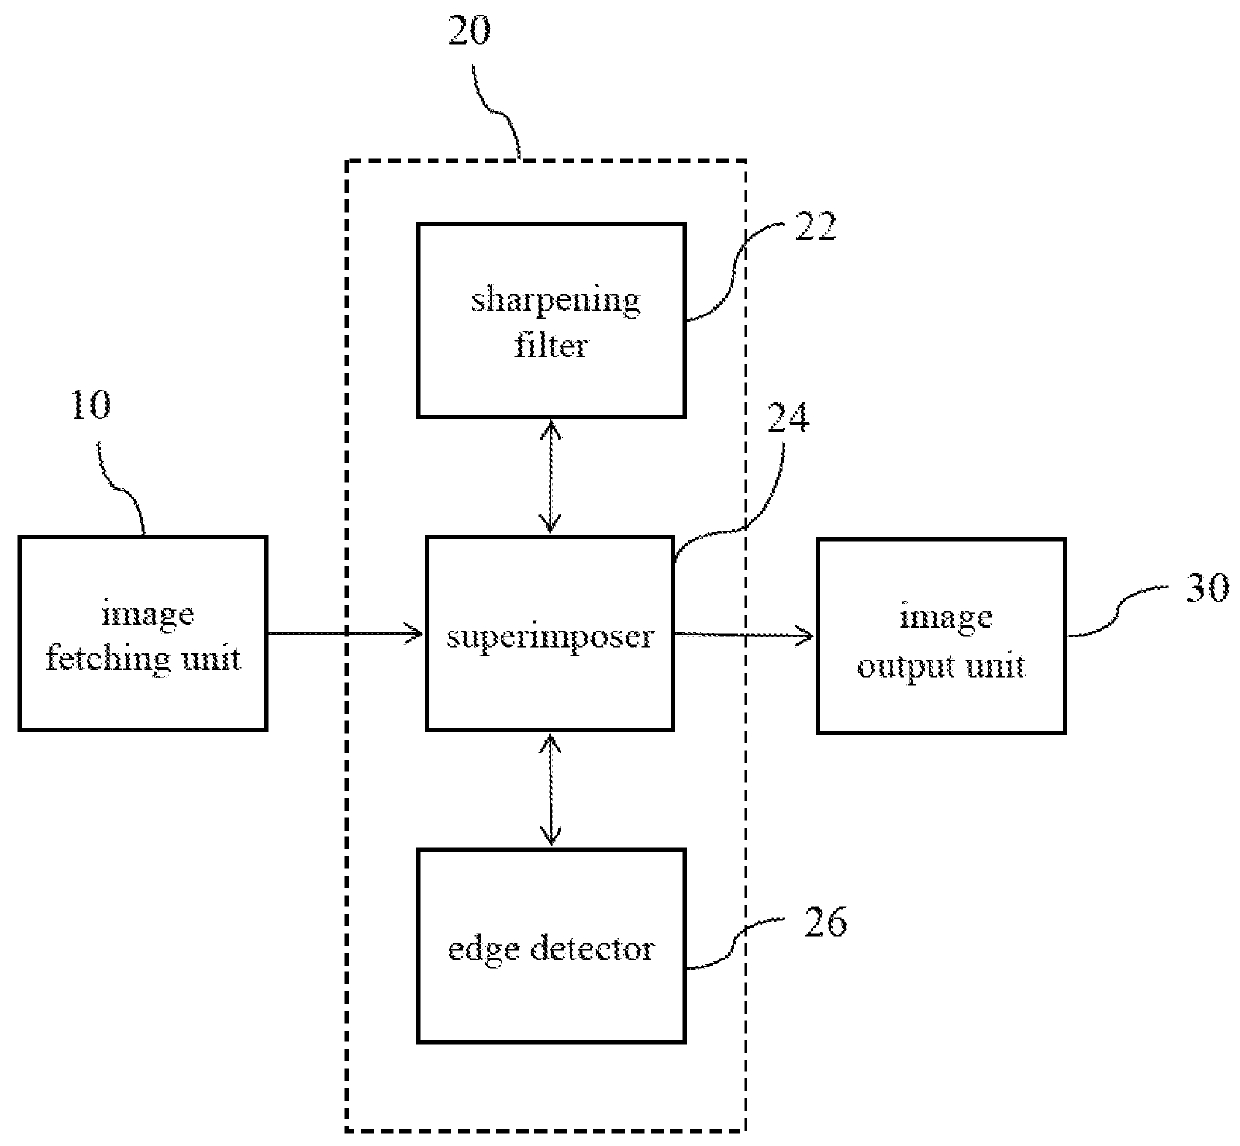 Self-adaptive image edge correction device and method thereof